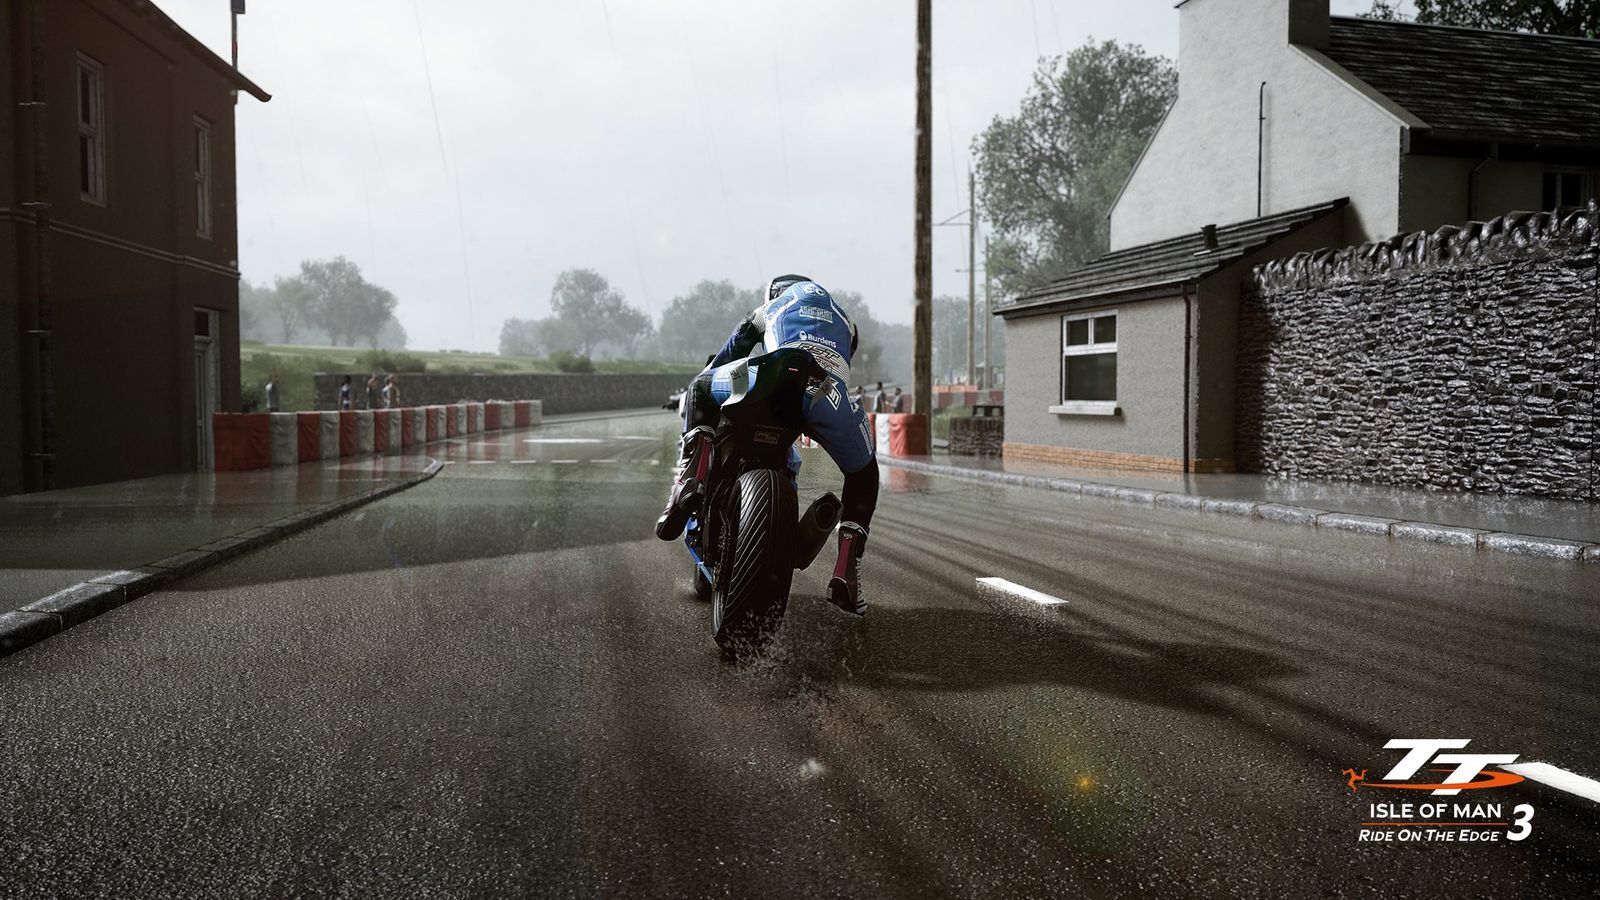 TT Isle of Man - Ride on the Edge 3 rain wet track